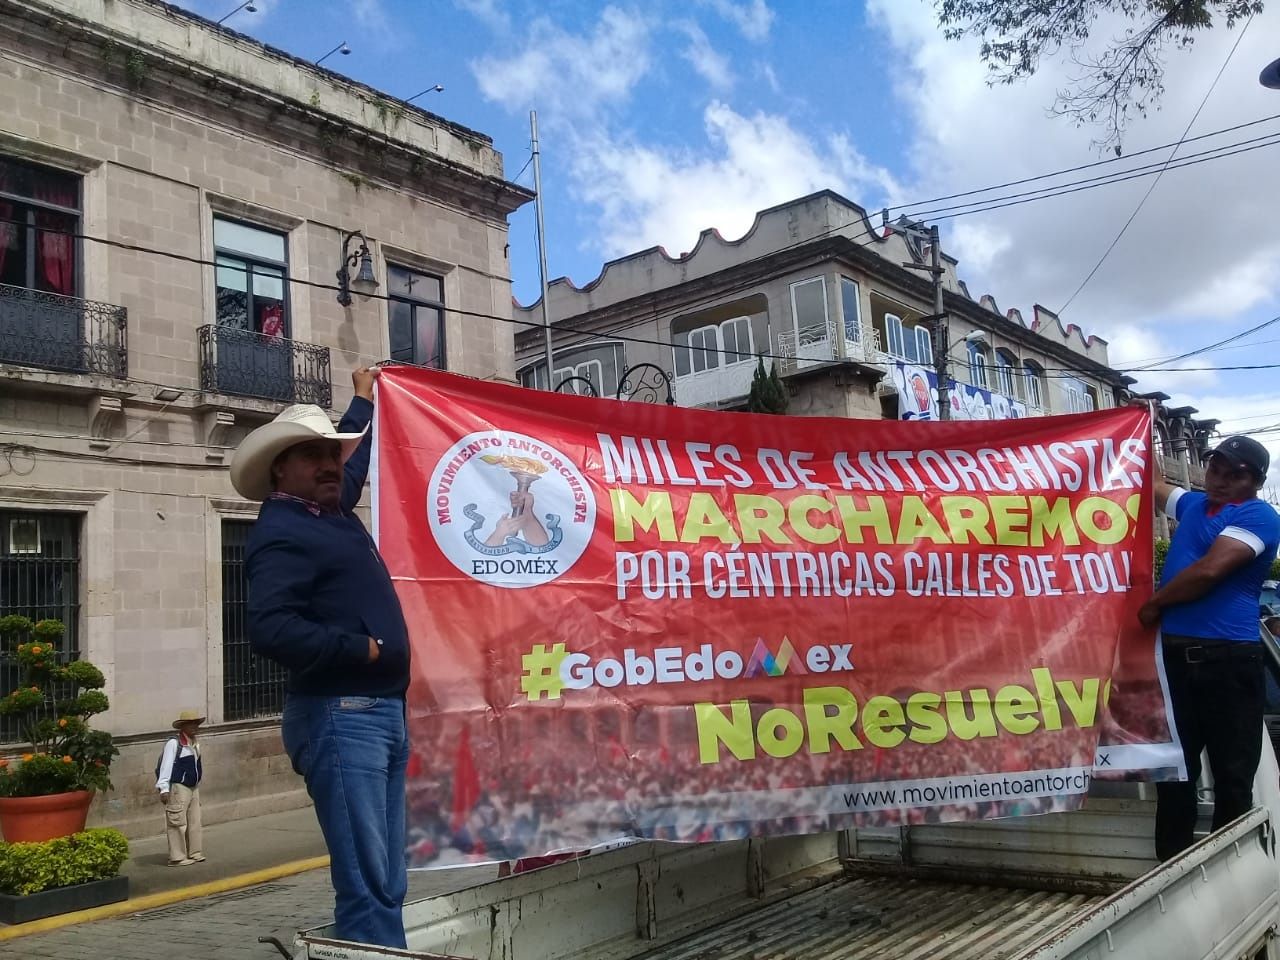 Miles de antorchistas marcharan por calles céntricas de Toluca 